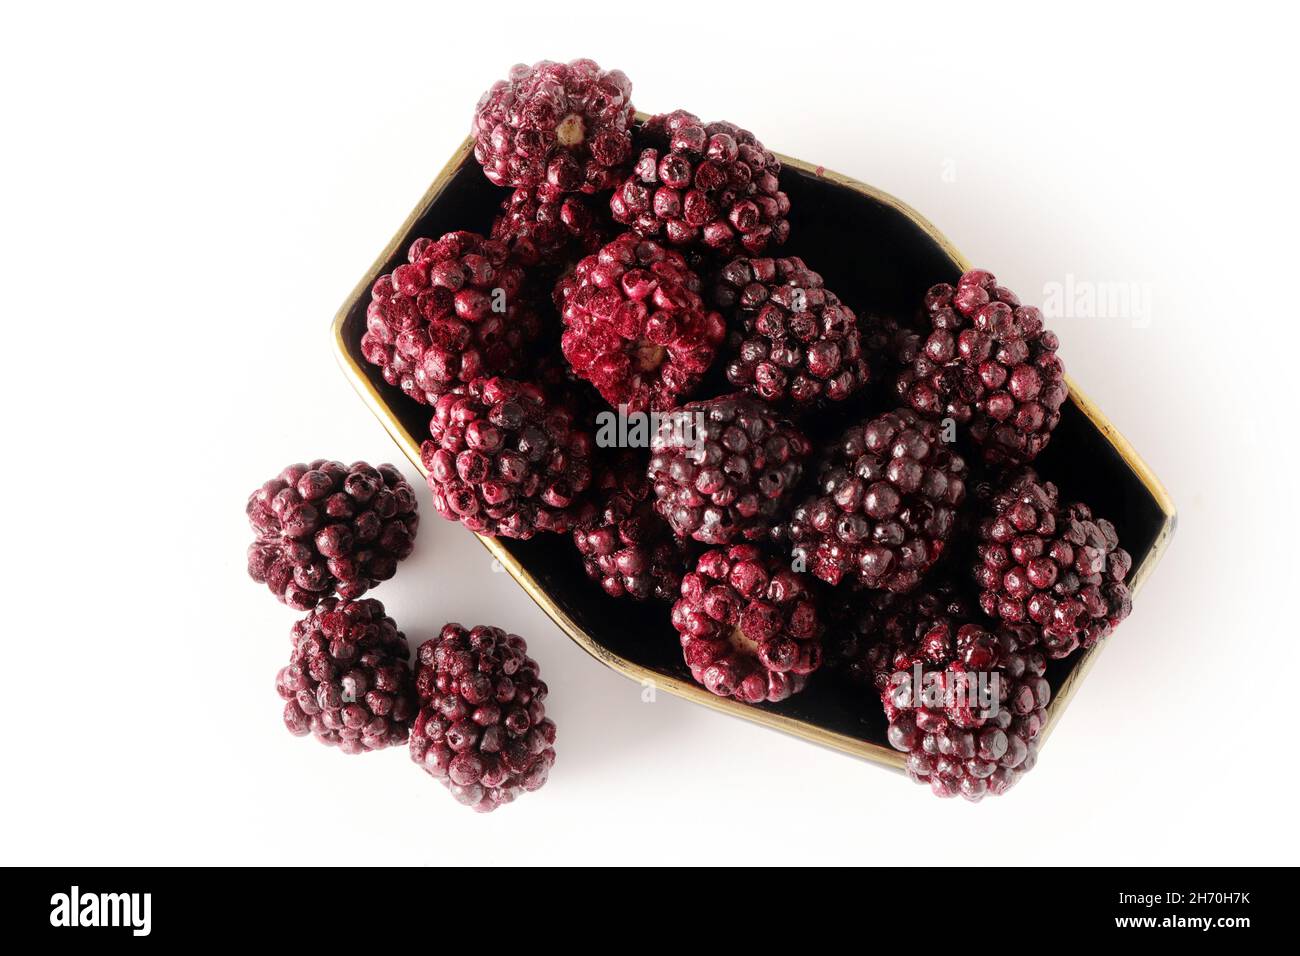 congele la fruta entera de blackberry seca Foto de stock